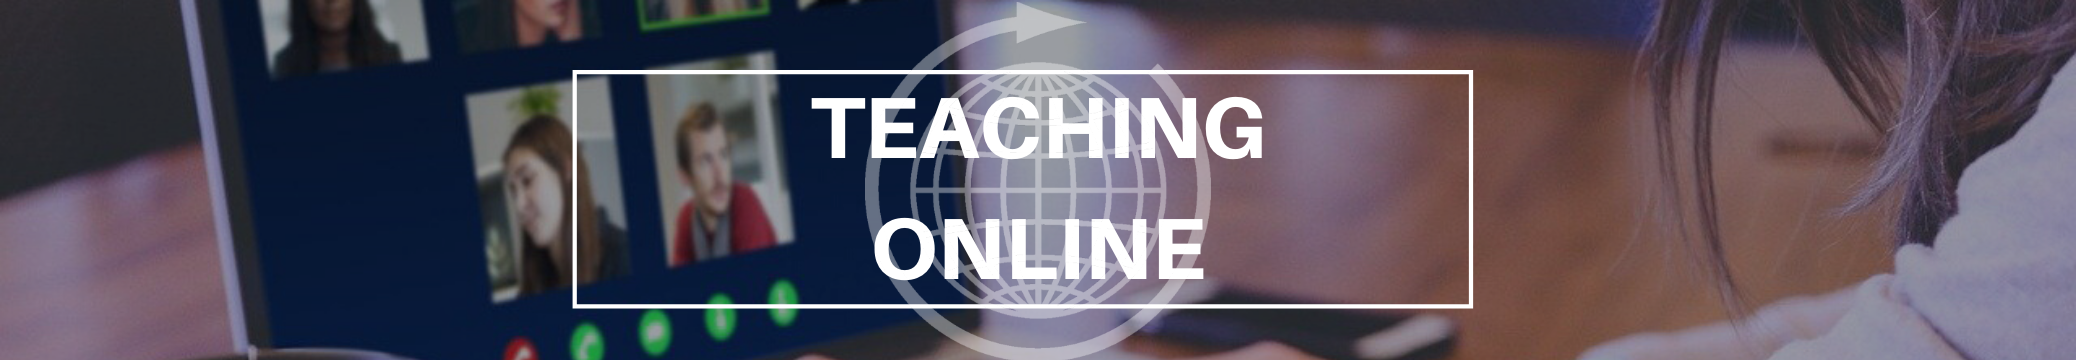 HRAF teaching online banner